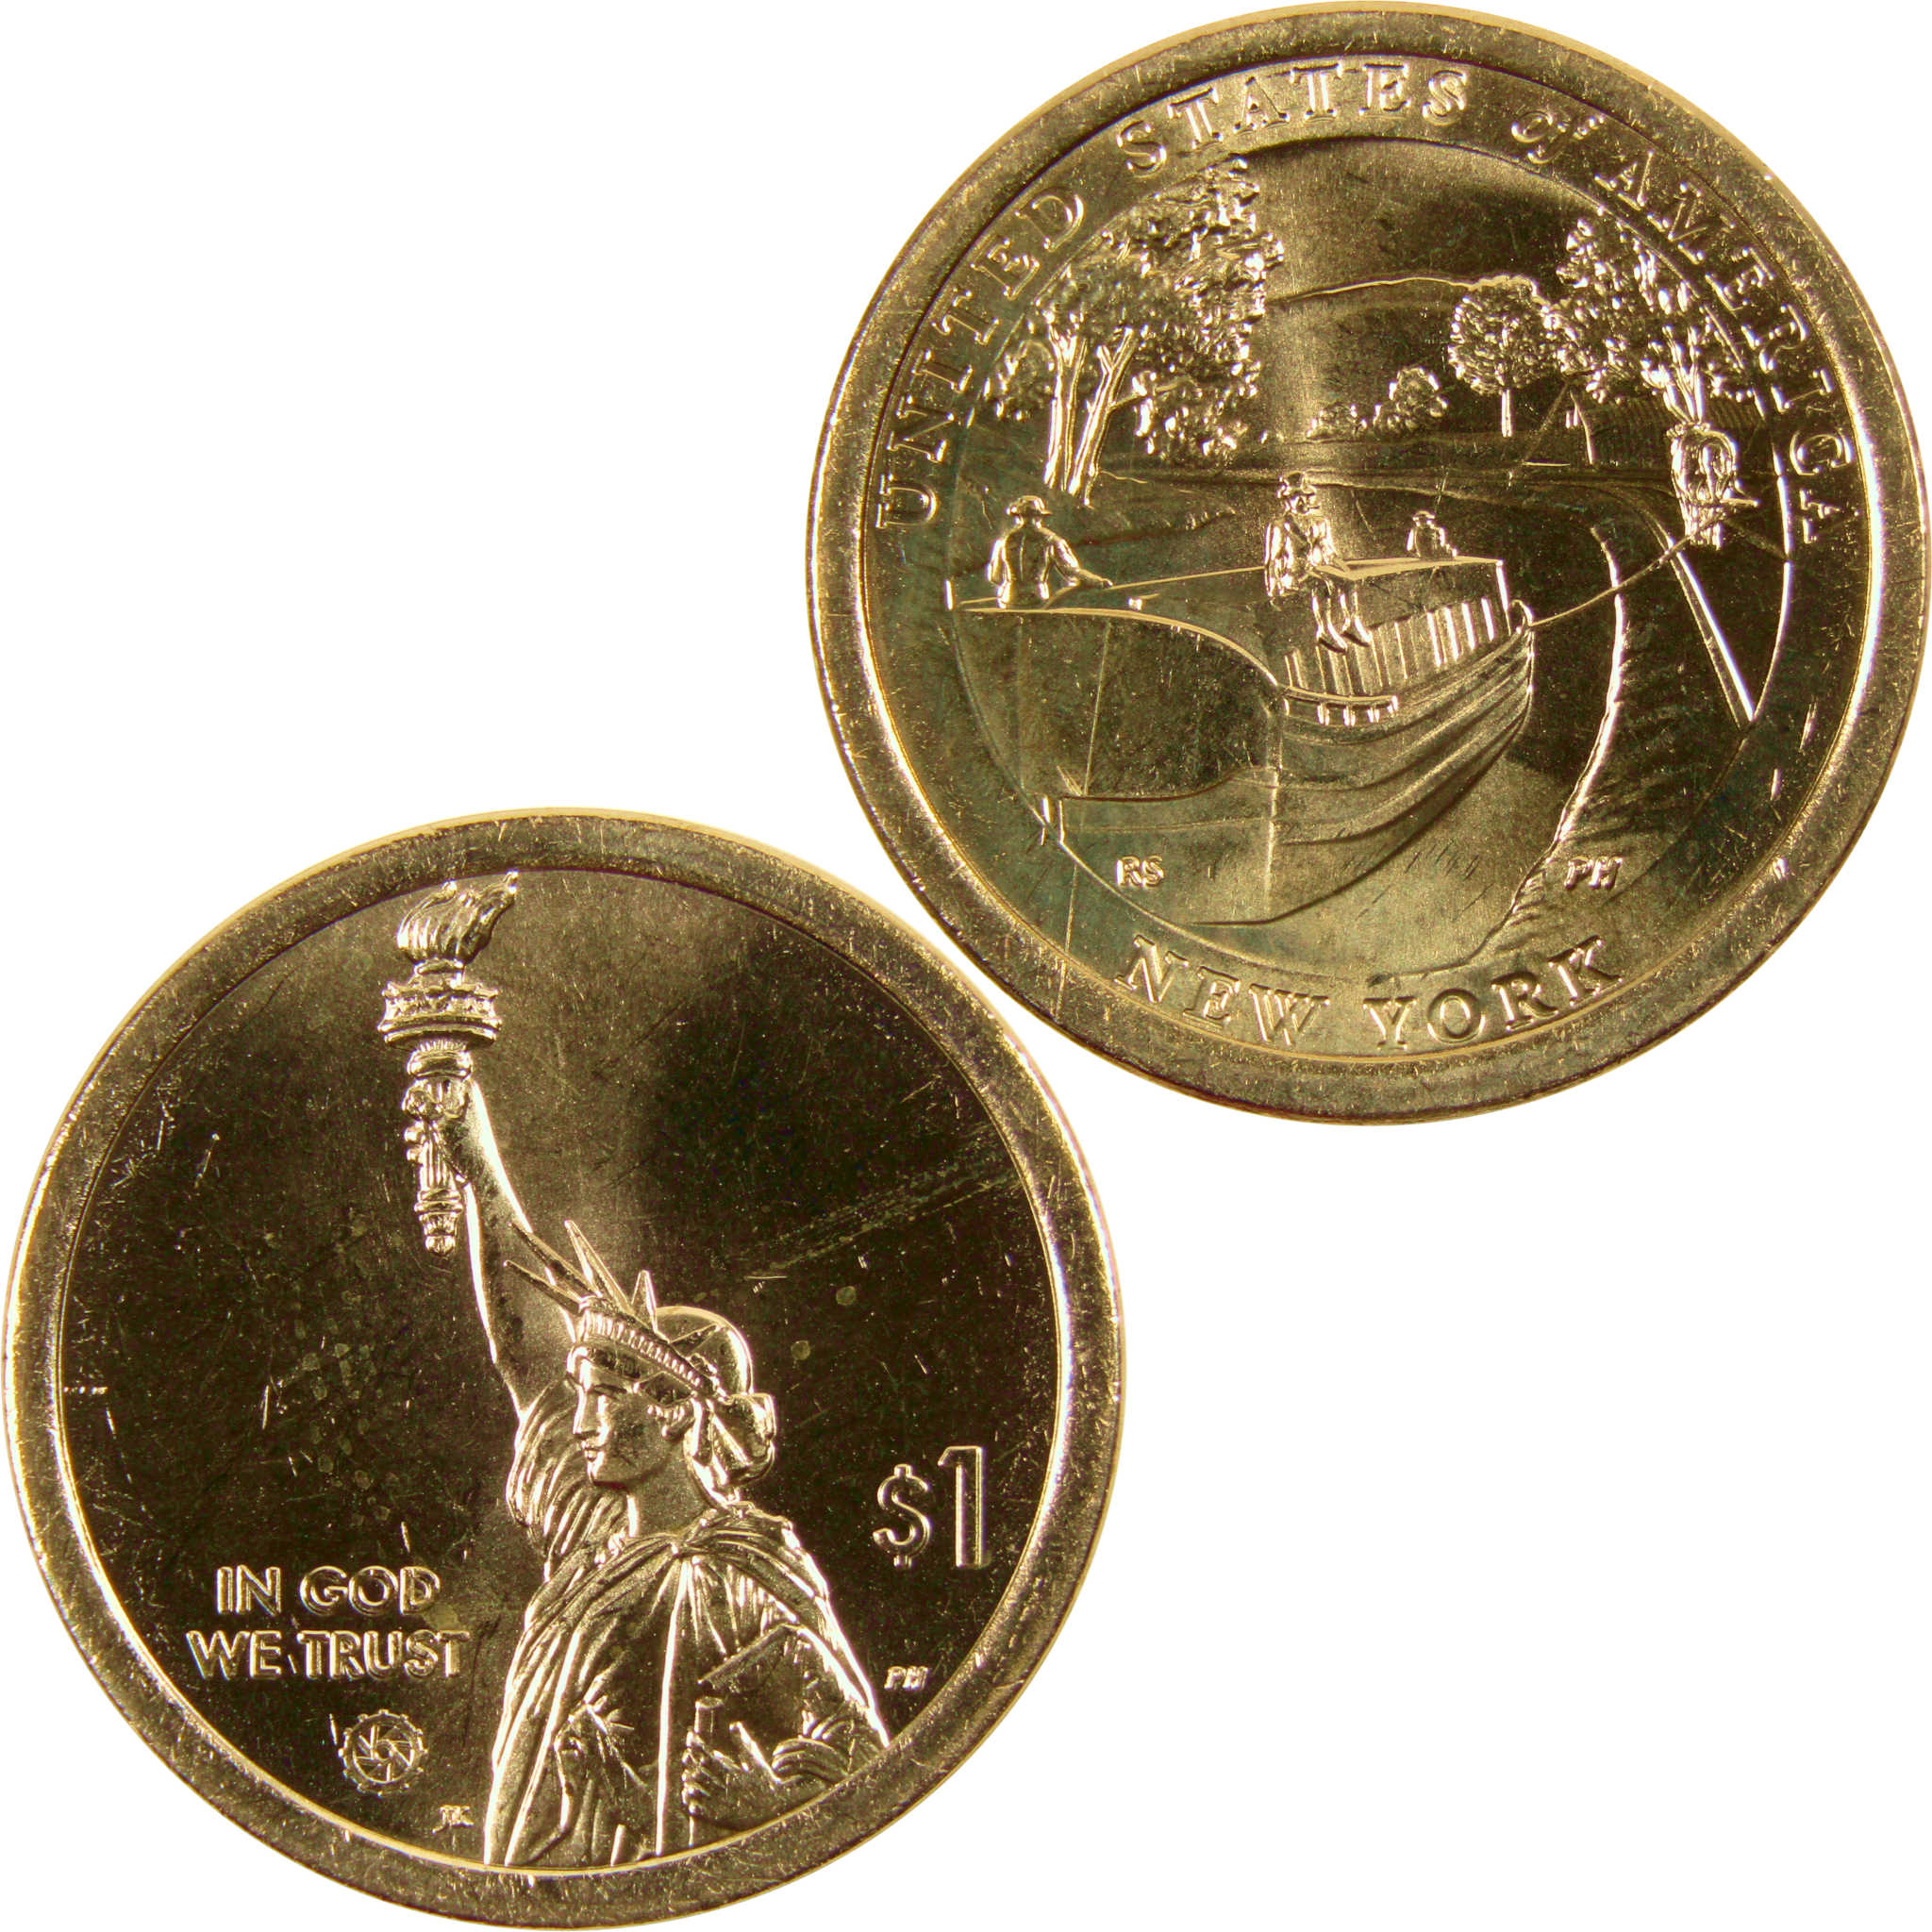 2021 D Erie Canal American Innovation Dollar BU Uncirculated $1 Coin